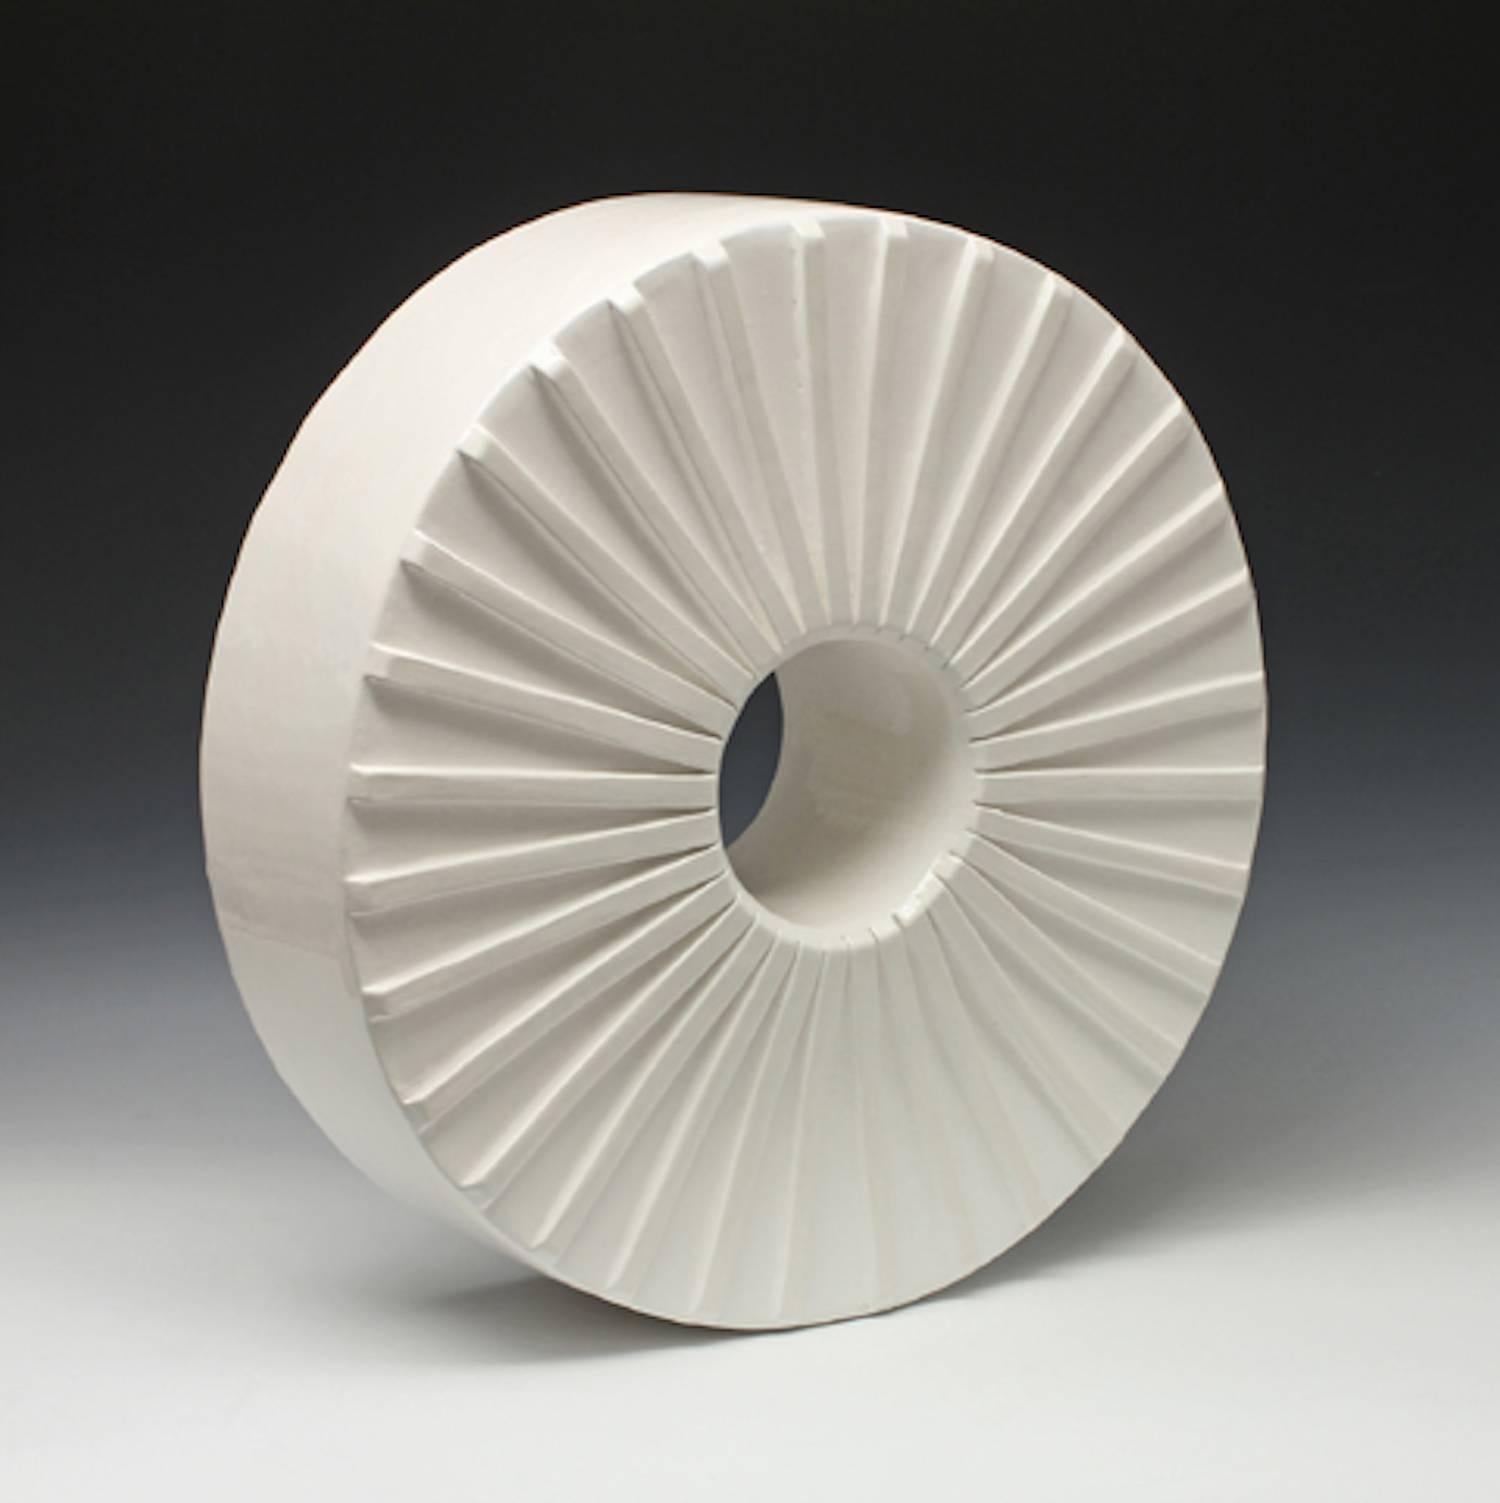 Jane B. Grimm Abstract Sculpture - Dial 1 / pop art free standing ceramic sculpture